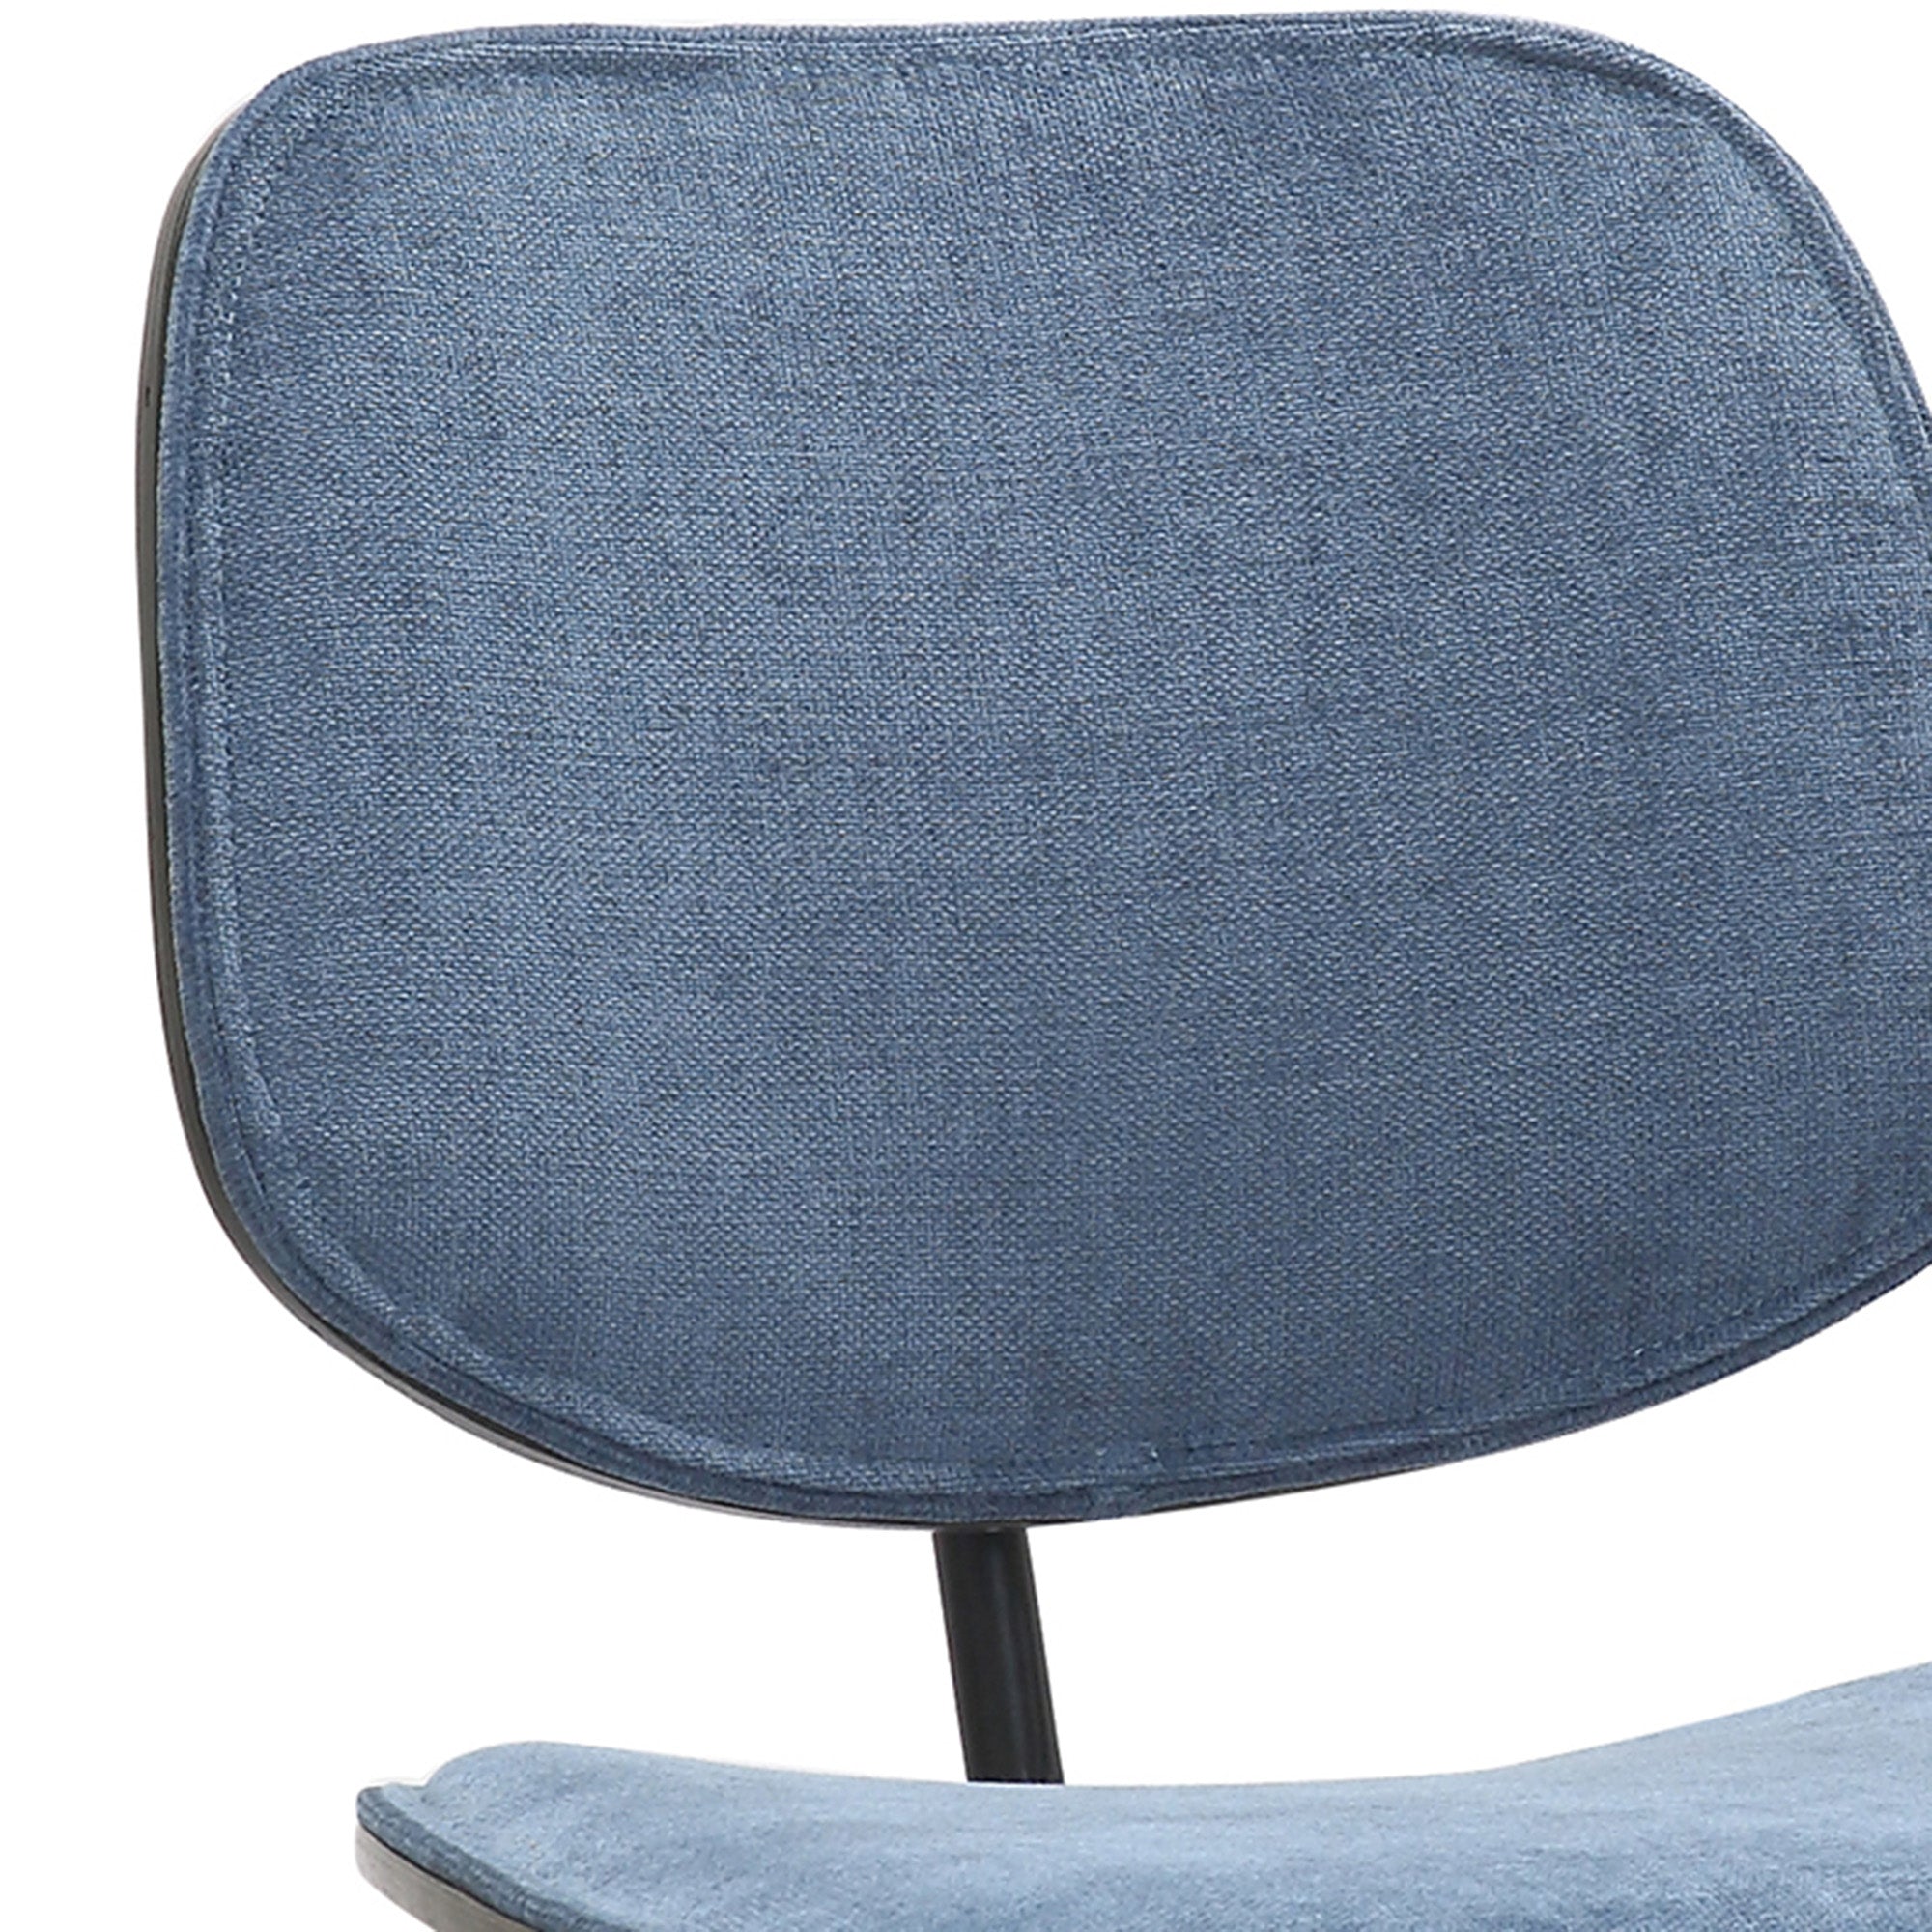 Capri Side Chair, Set of 2, in Blue, Walnut and Black 202-591BLU